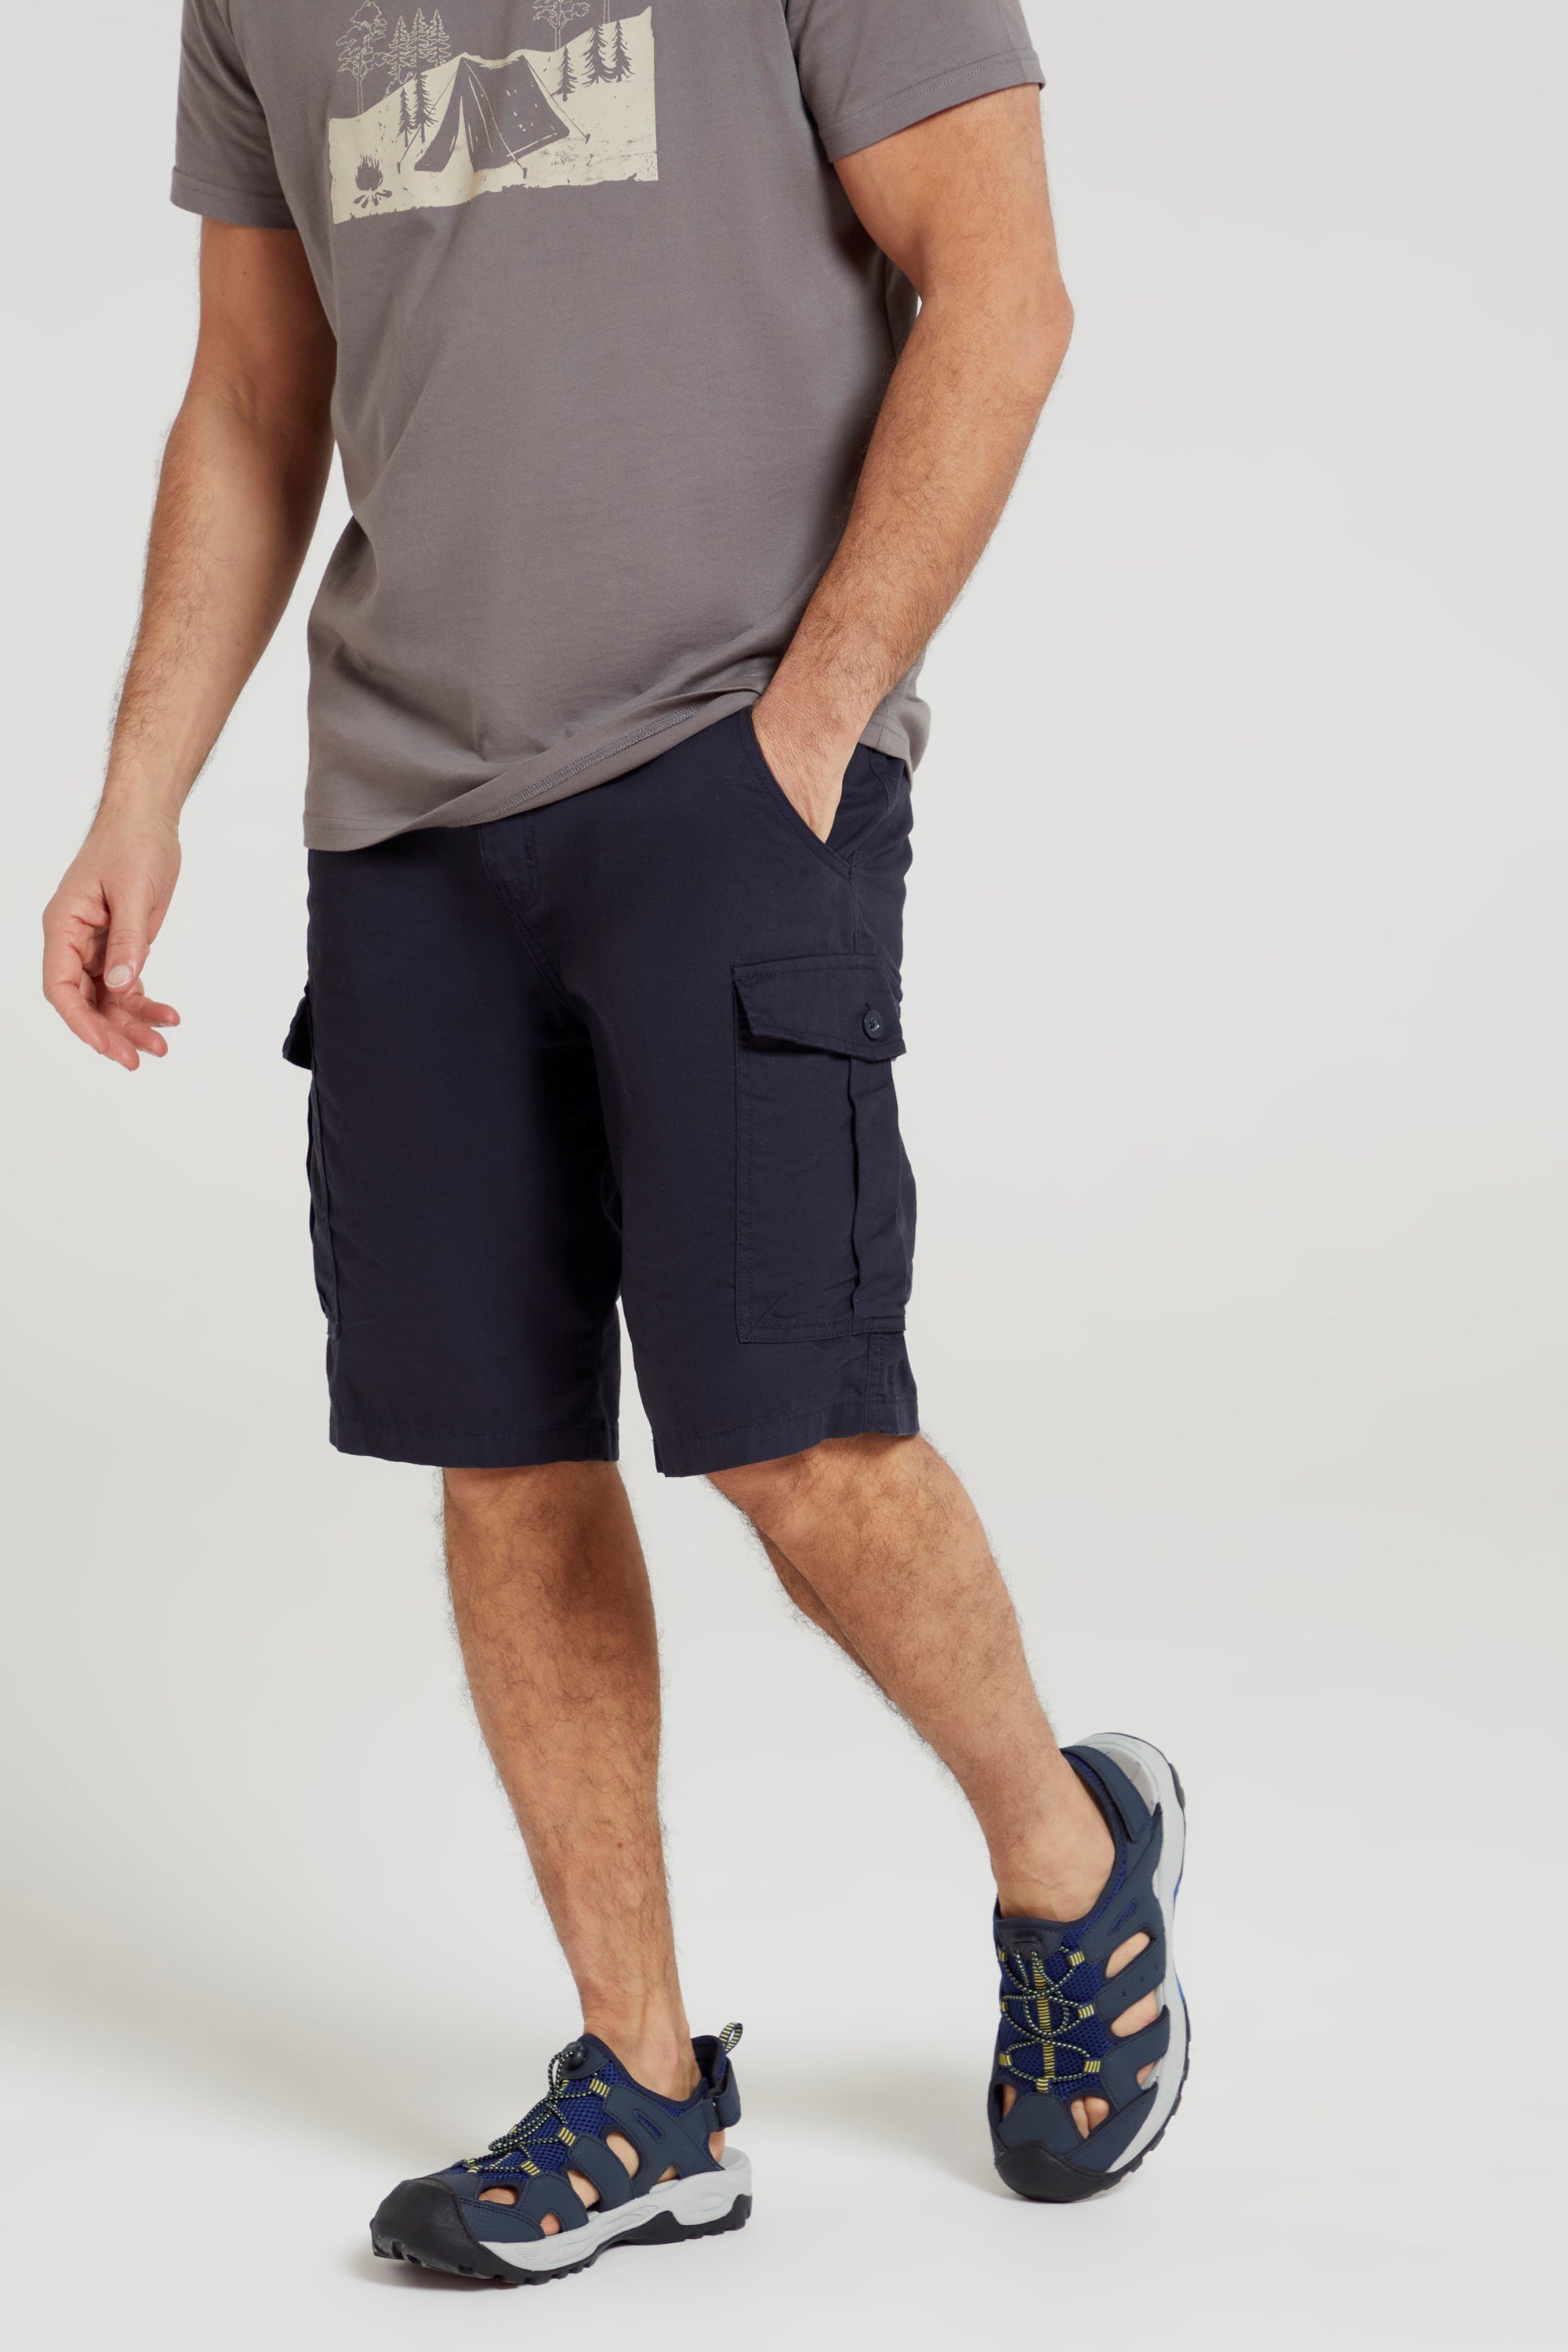 Mens Casual Work Cargo Shorts Summer Half Pant Walking Shorts Work